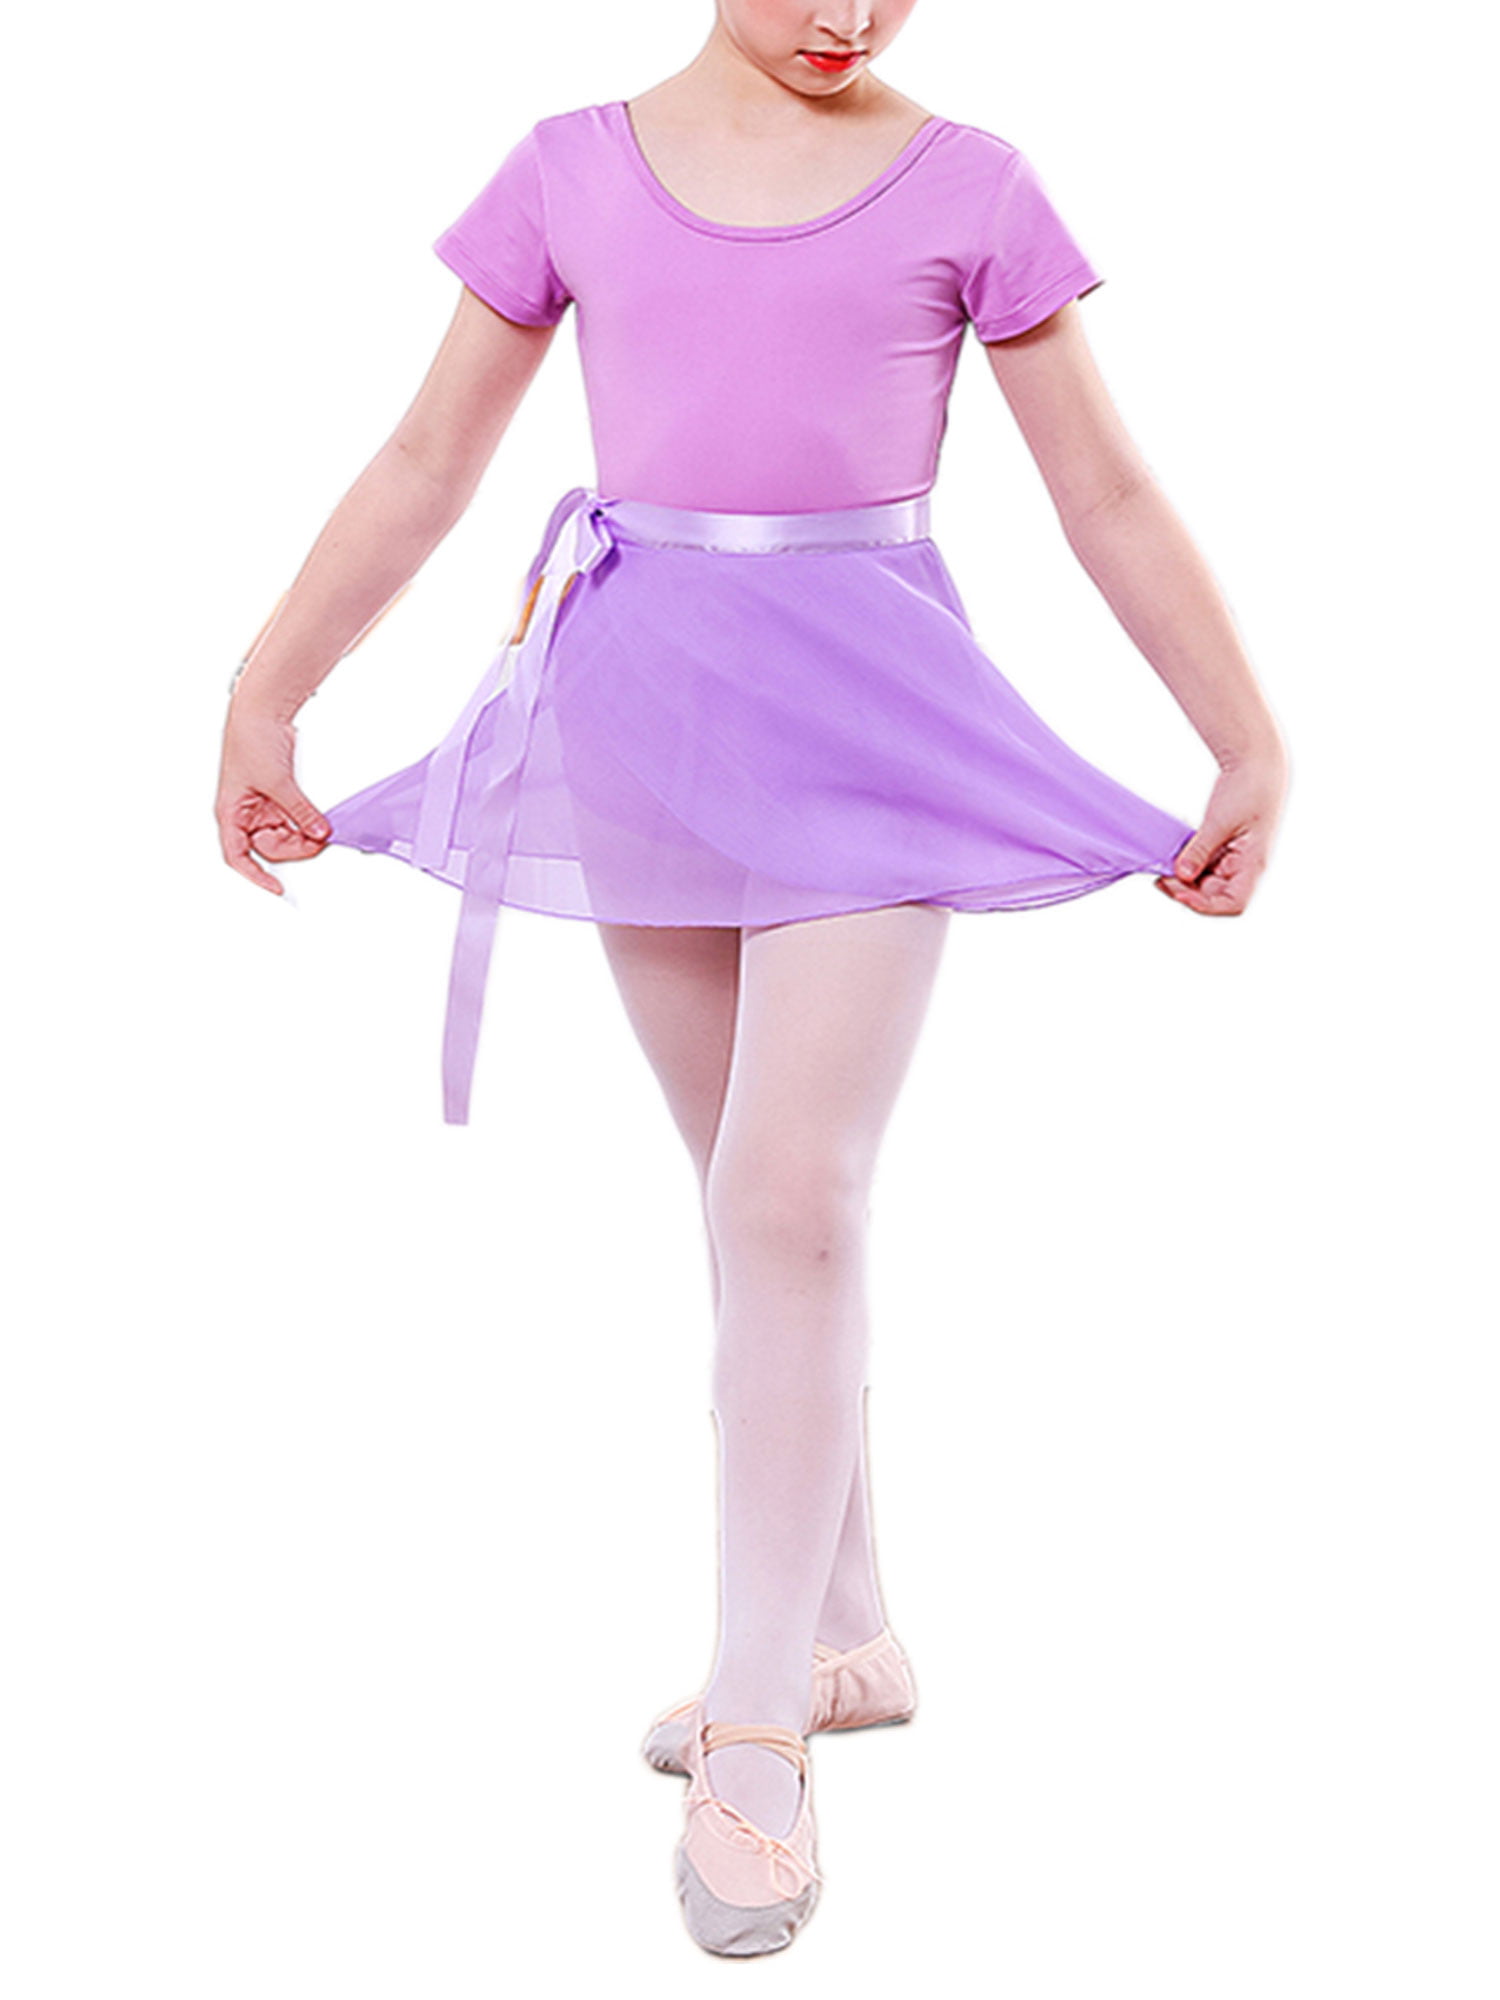 Belovecol Girls Gymnastics Leotards Skirted Dance Dress Mermaid Sleeveless Leotard Skirt with Shorts 4-9 Years